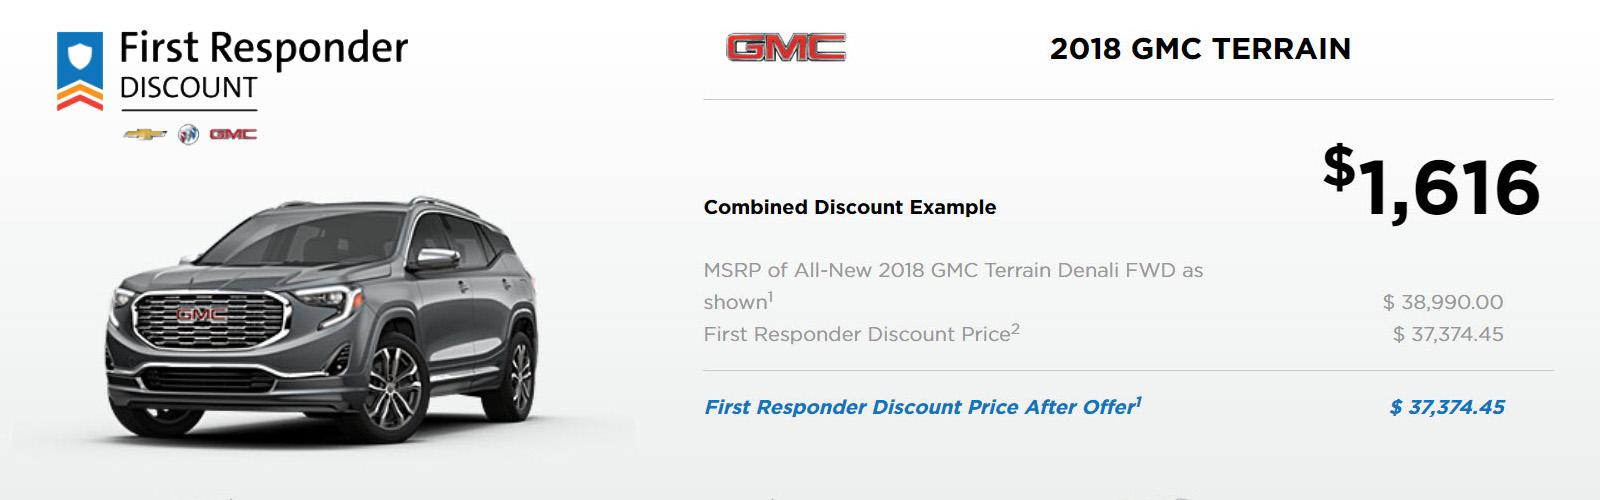 First Responder GMC Terrain Example Discount 